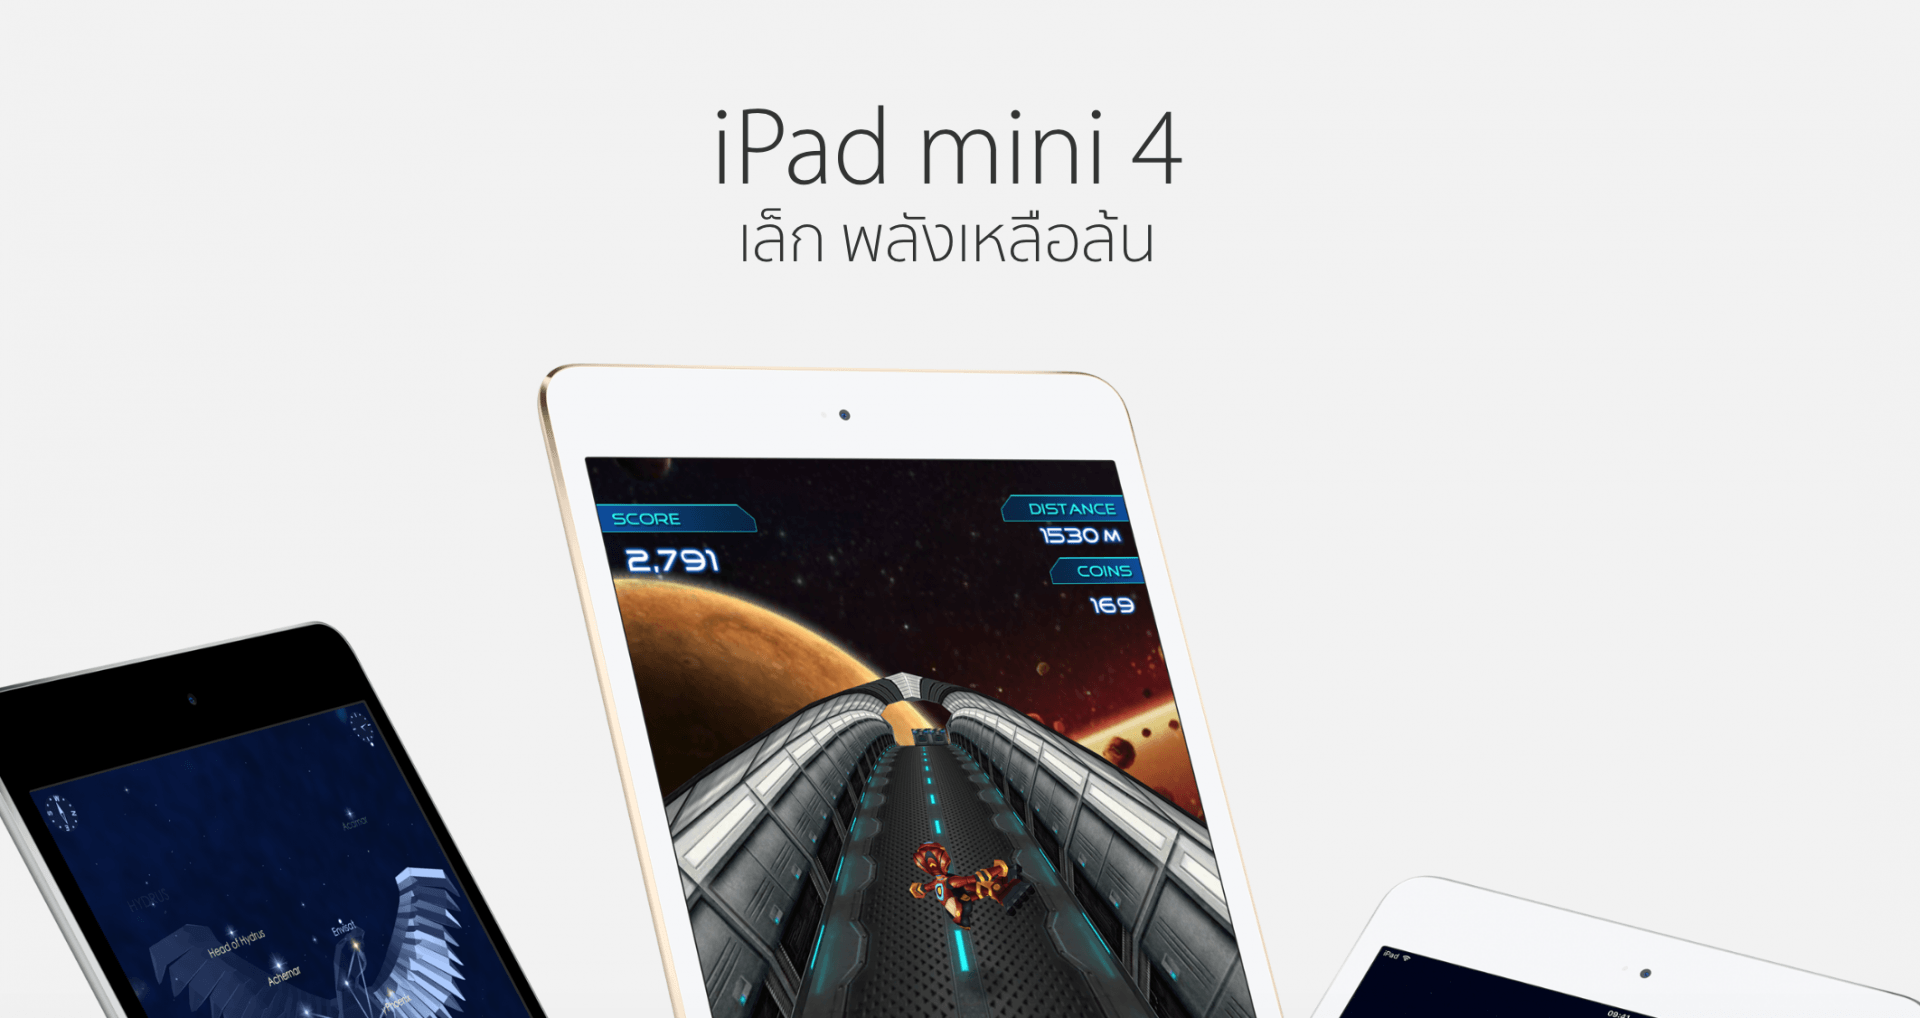 Apple ปรับลดราคา iPad mini 4 พร้อมยกเลิกจำหน่าย iPad mini 2